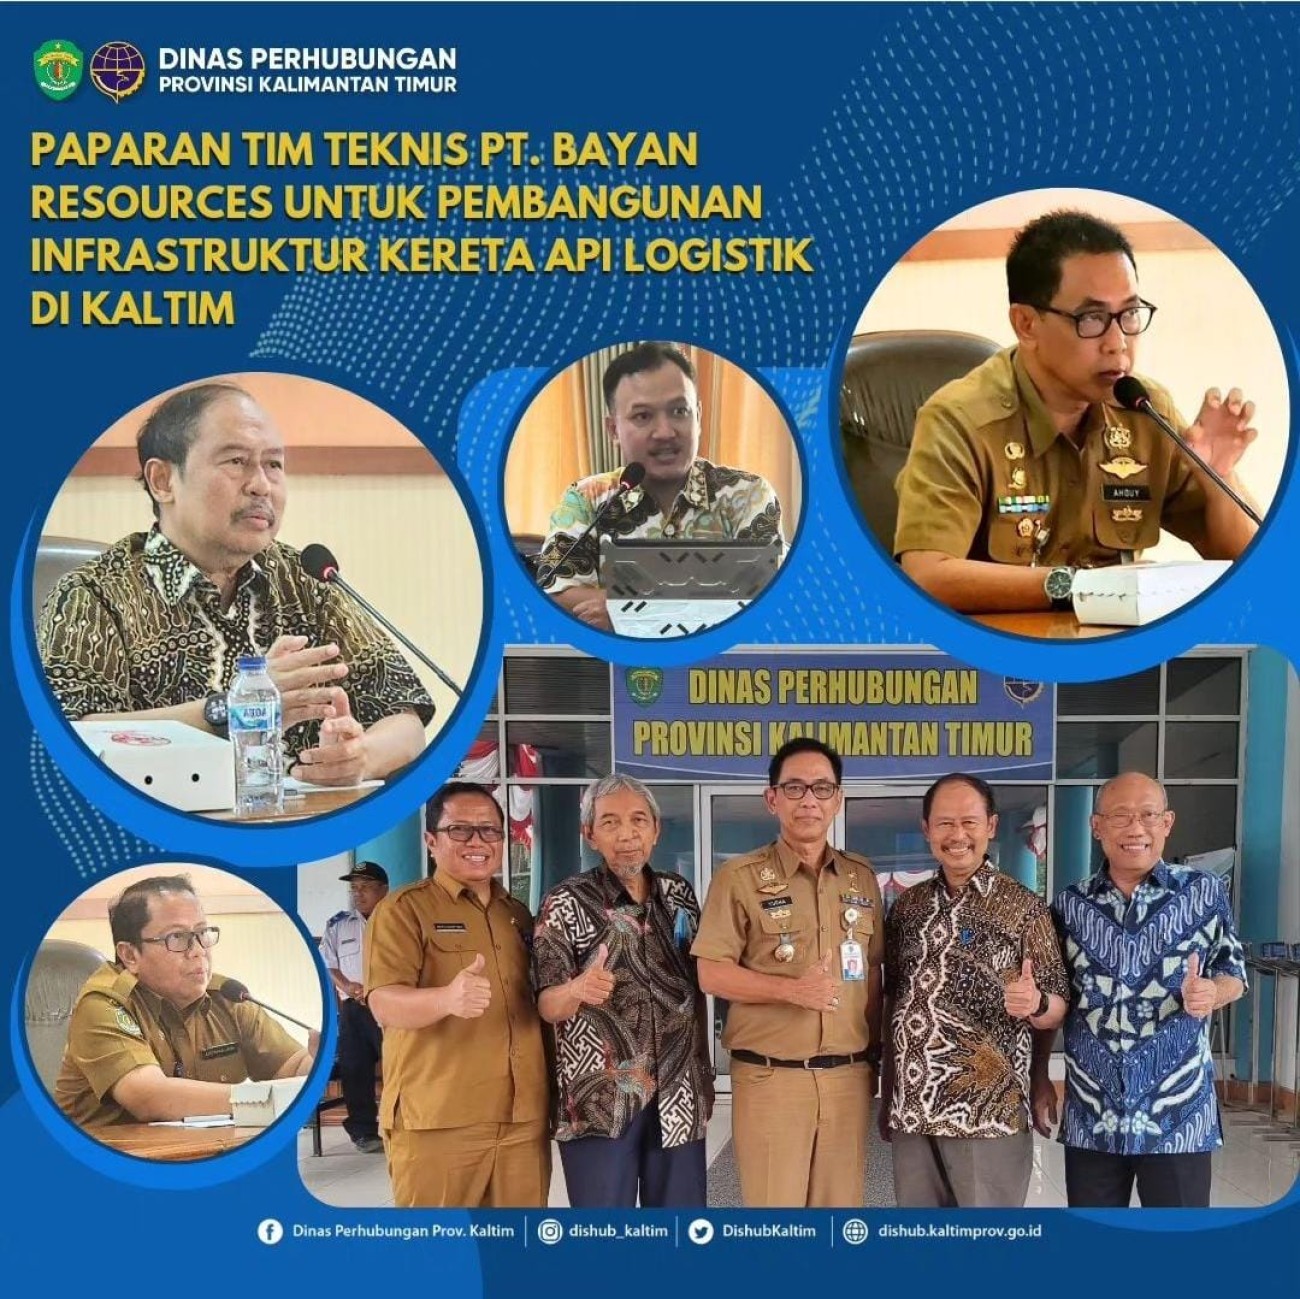 Paparan Tim Teknis PT. Bayan Resources untuk Pembangunan Infrastruktur Kereta Api Logistik di Kaltim